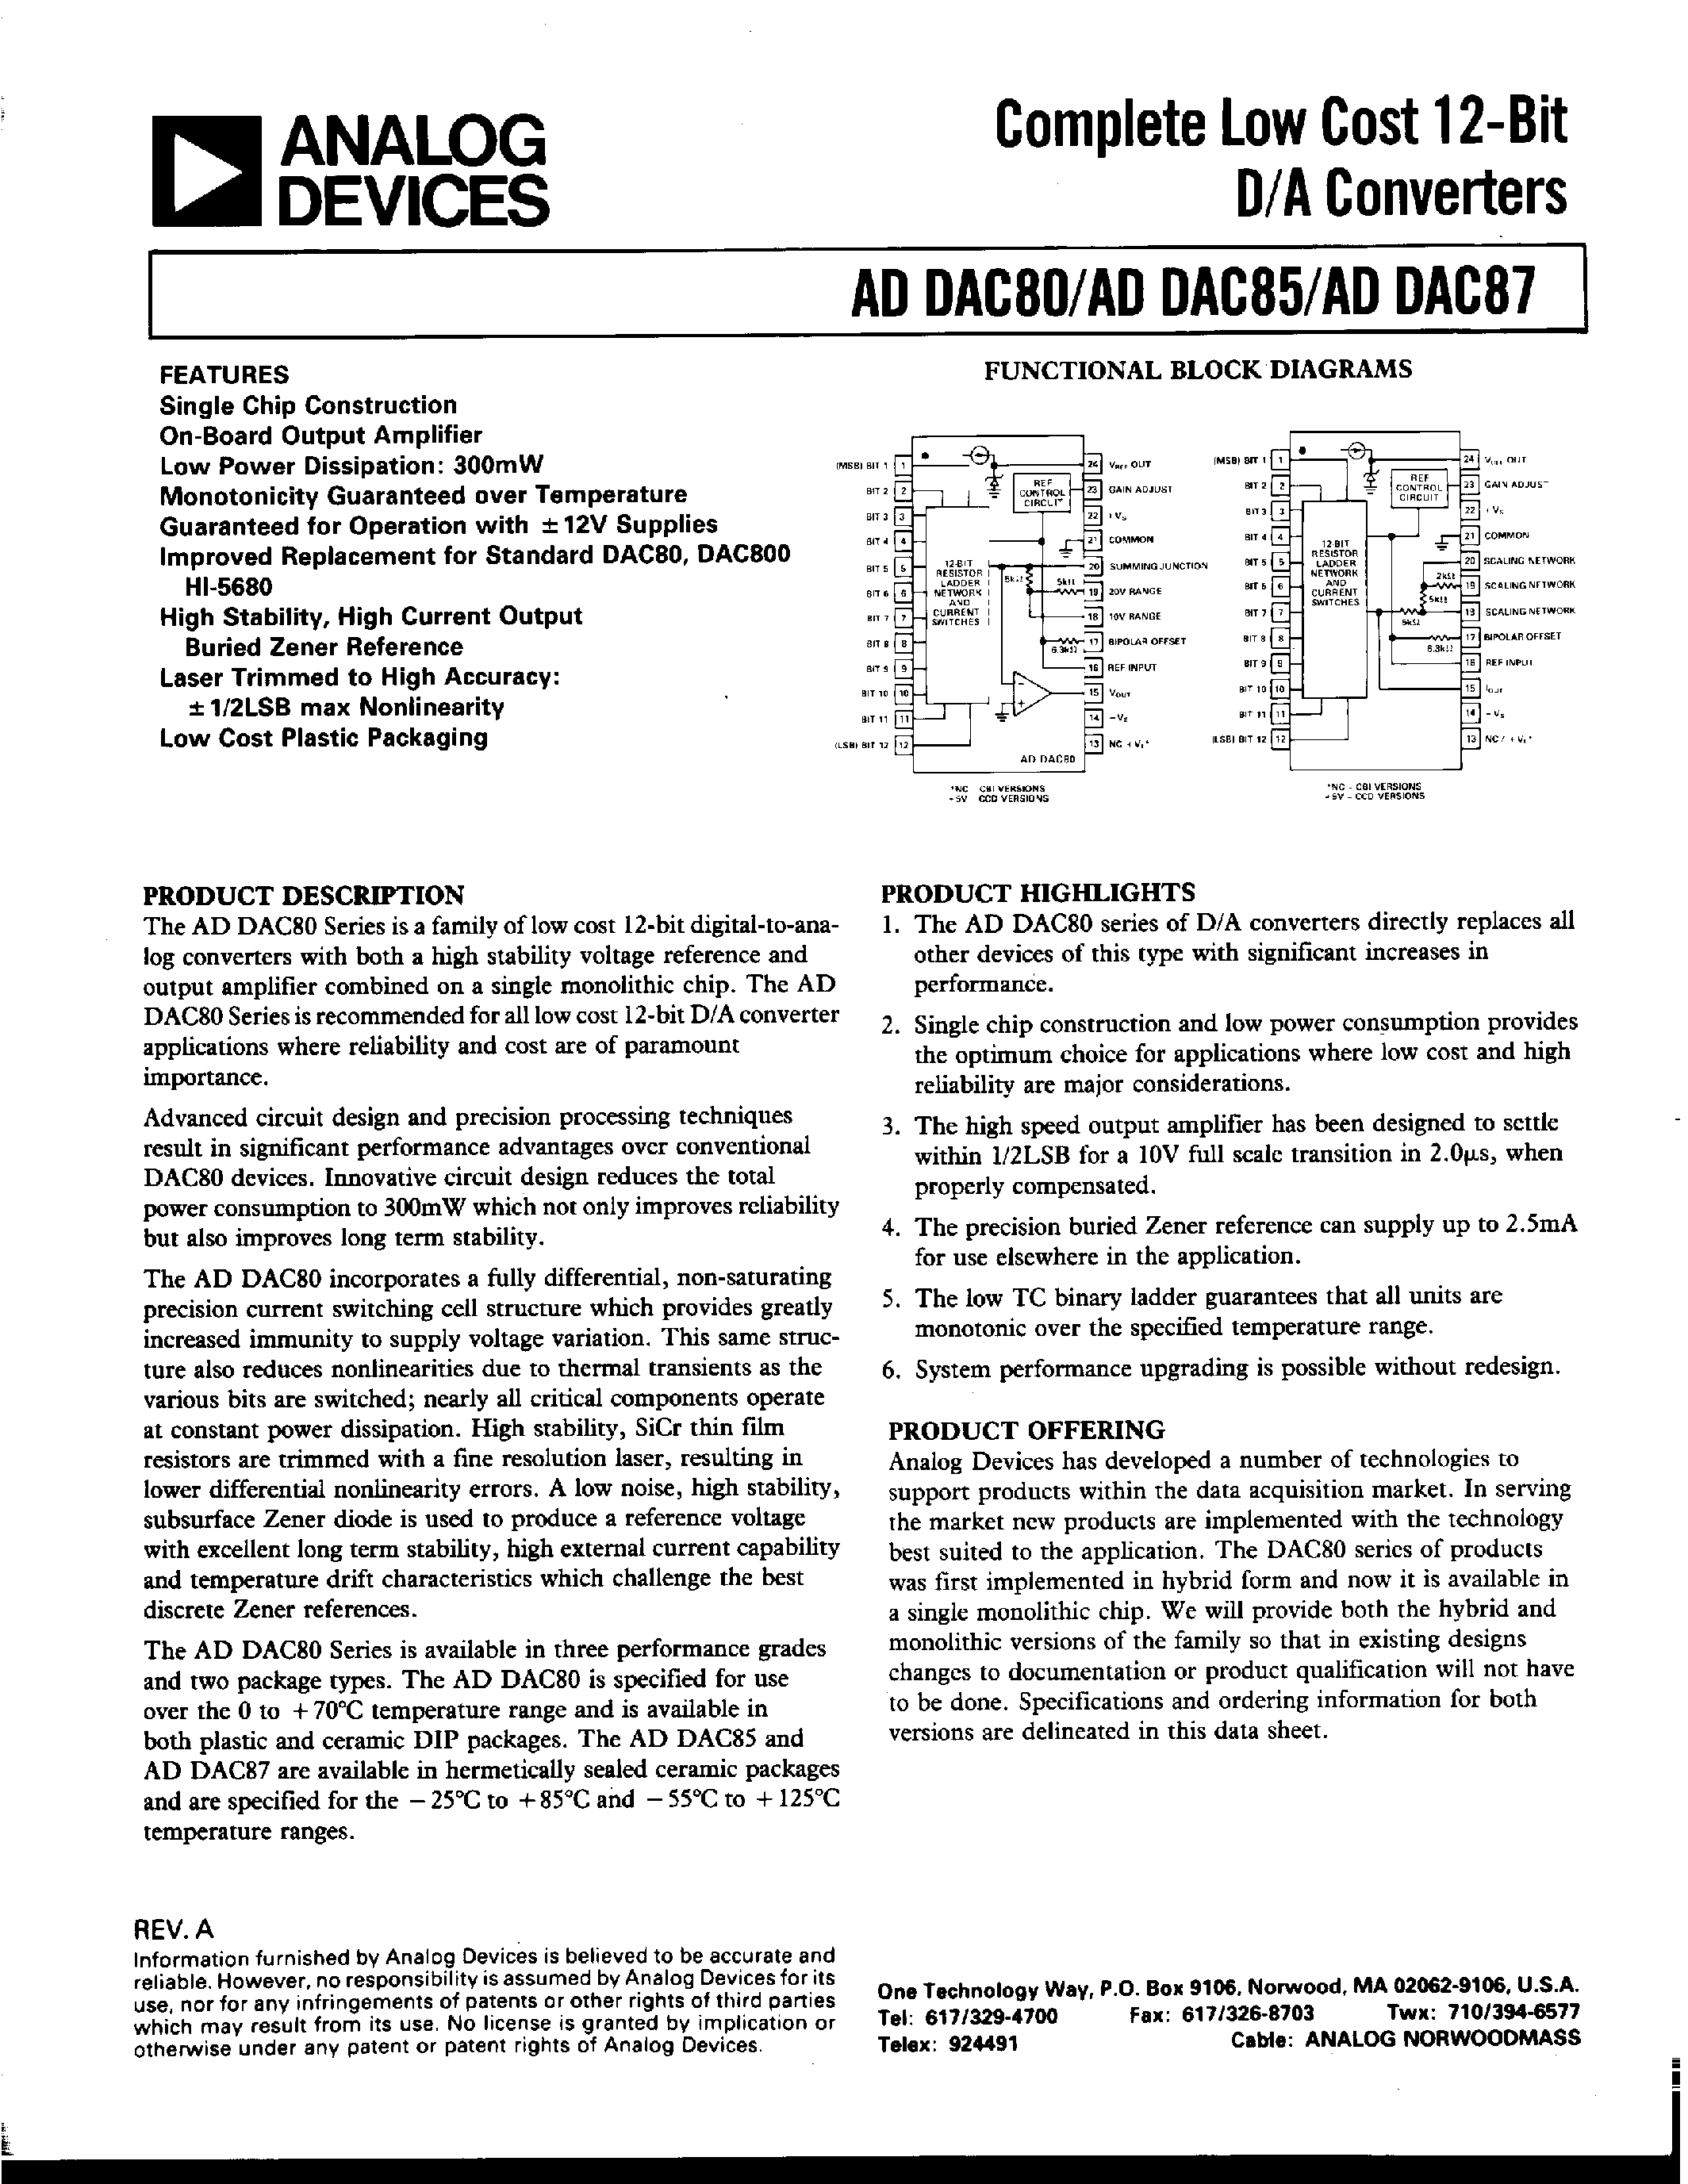 Даташит ADDAC80 - COMPLETE LOW COST 12-BIT D/A CONVERTERS страница 1